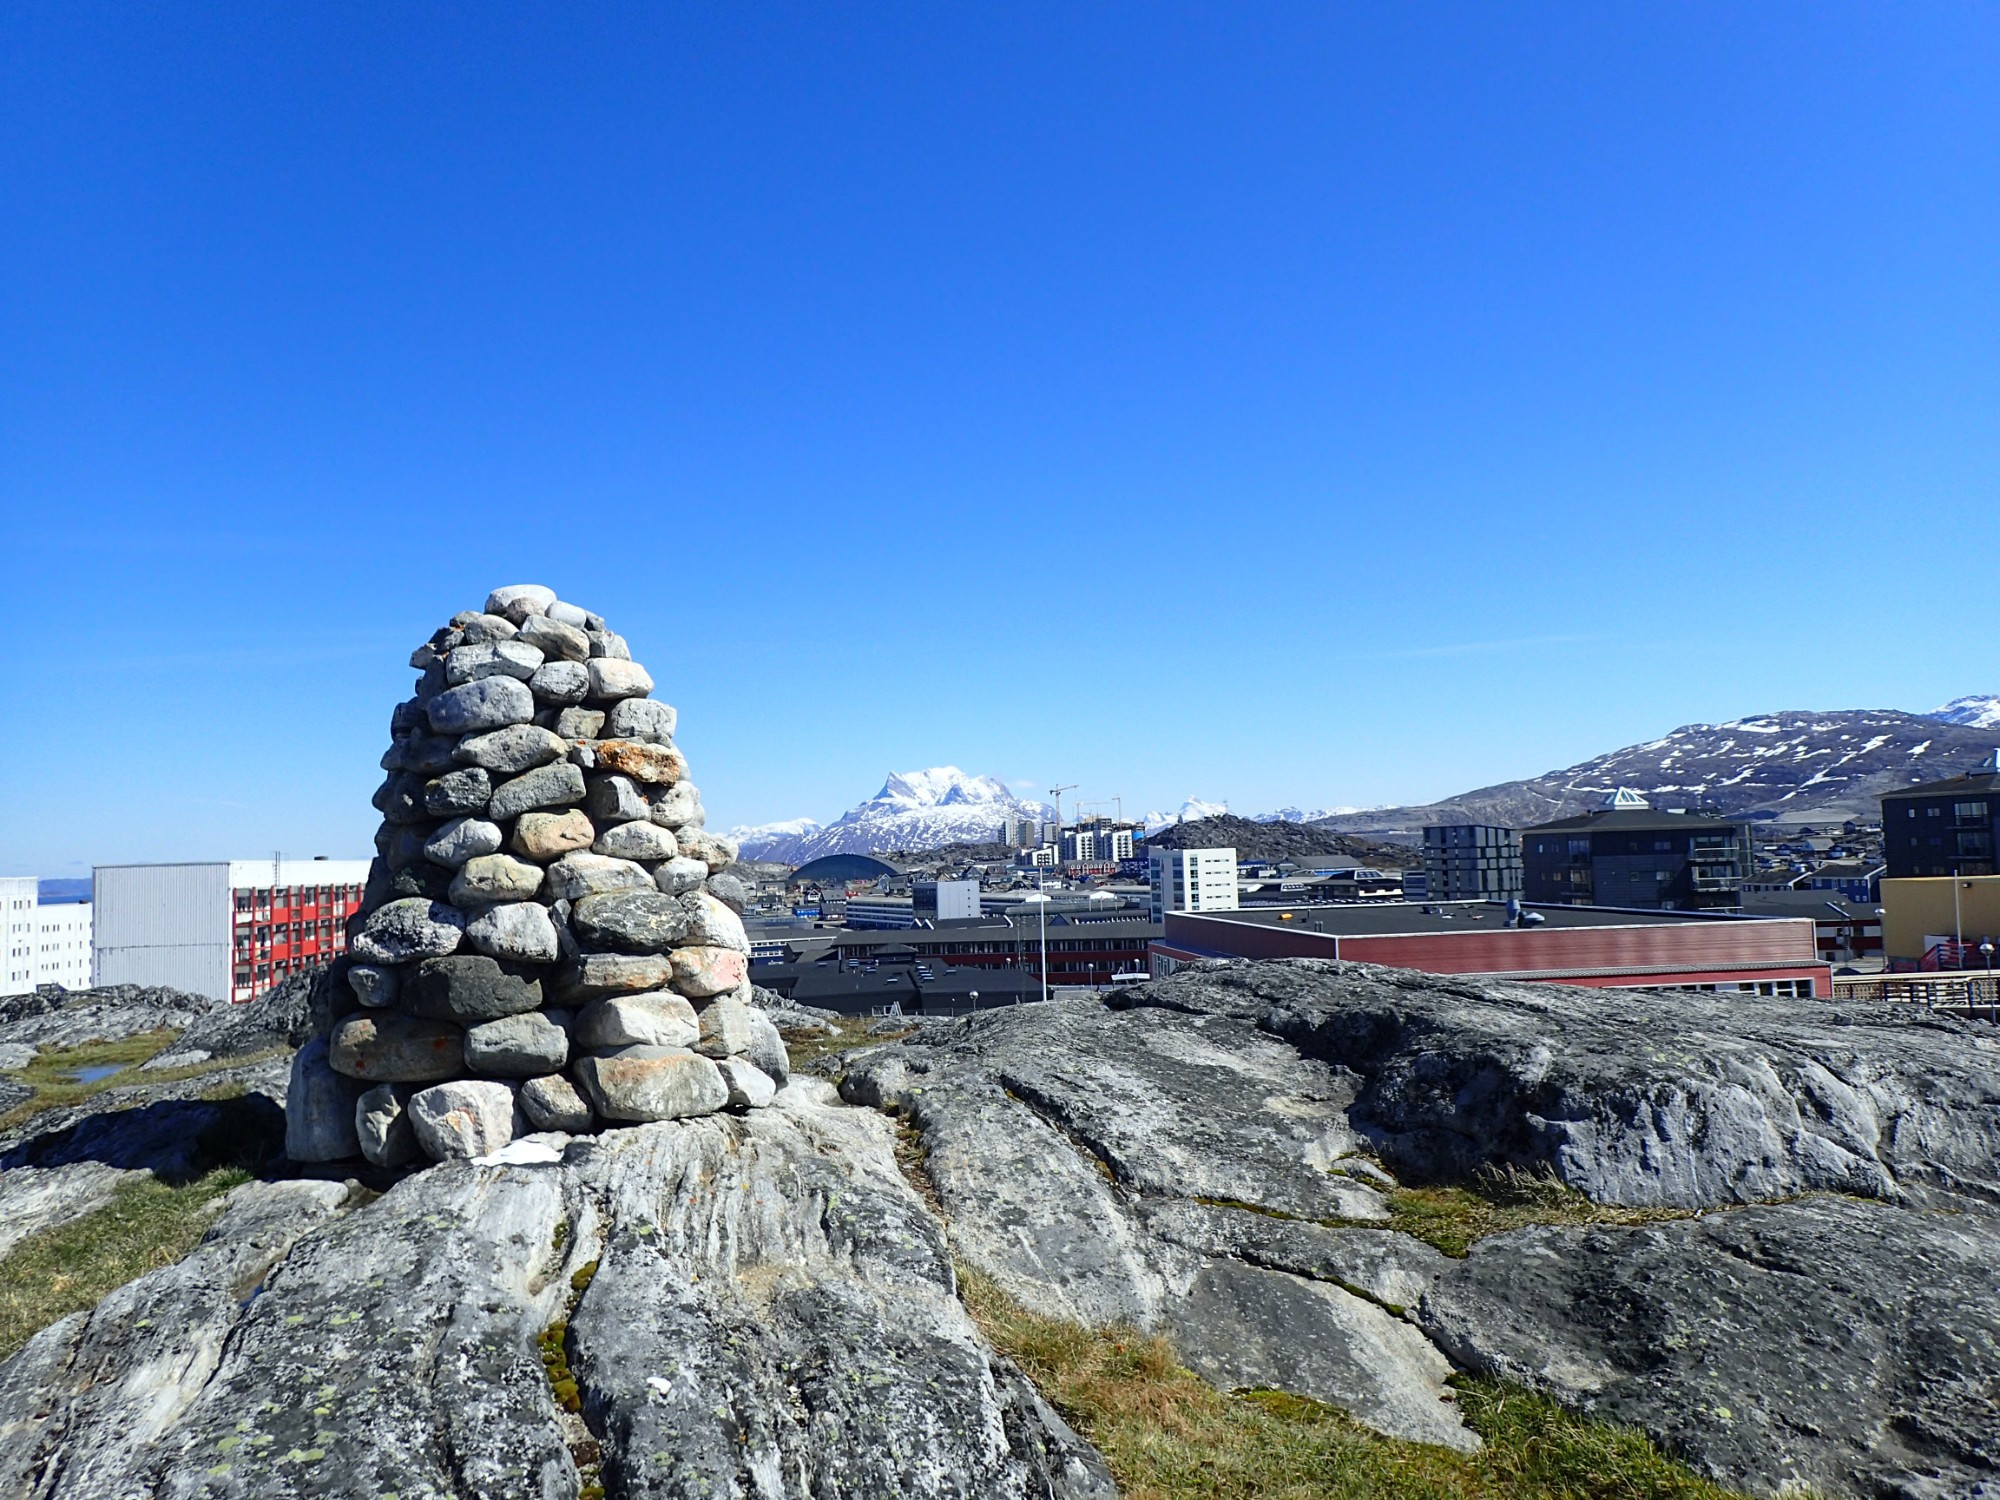 Jubilee Memorial, Greenland